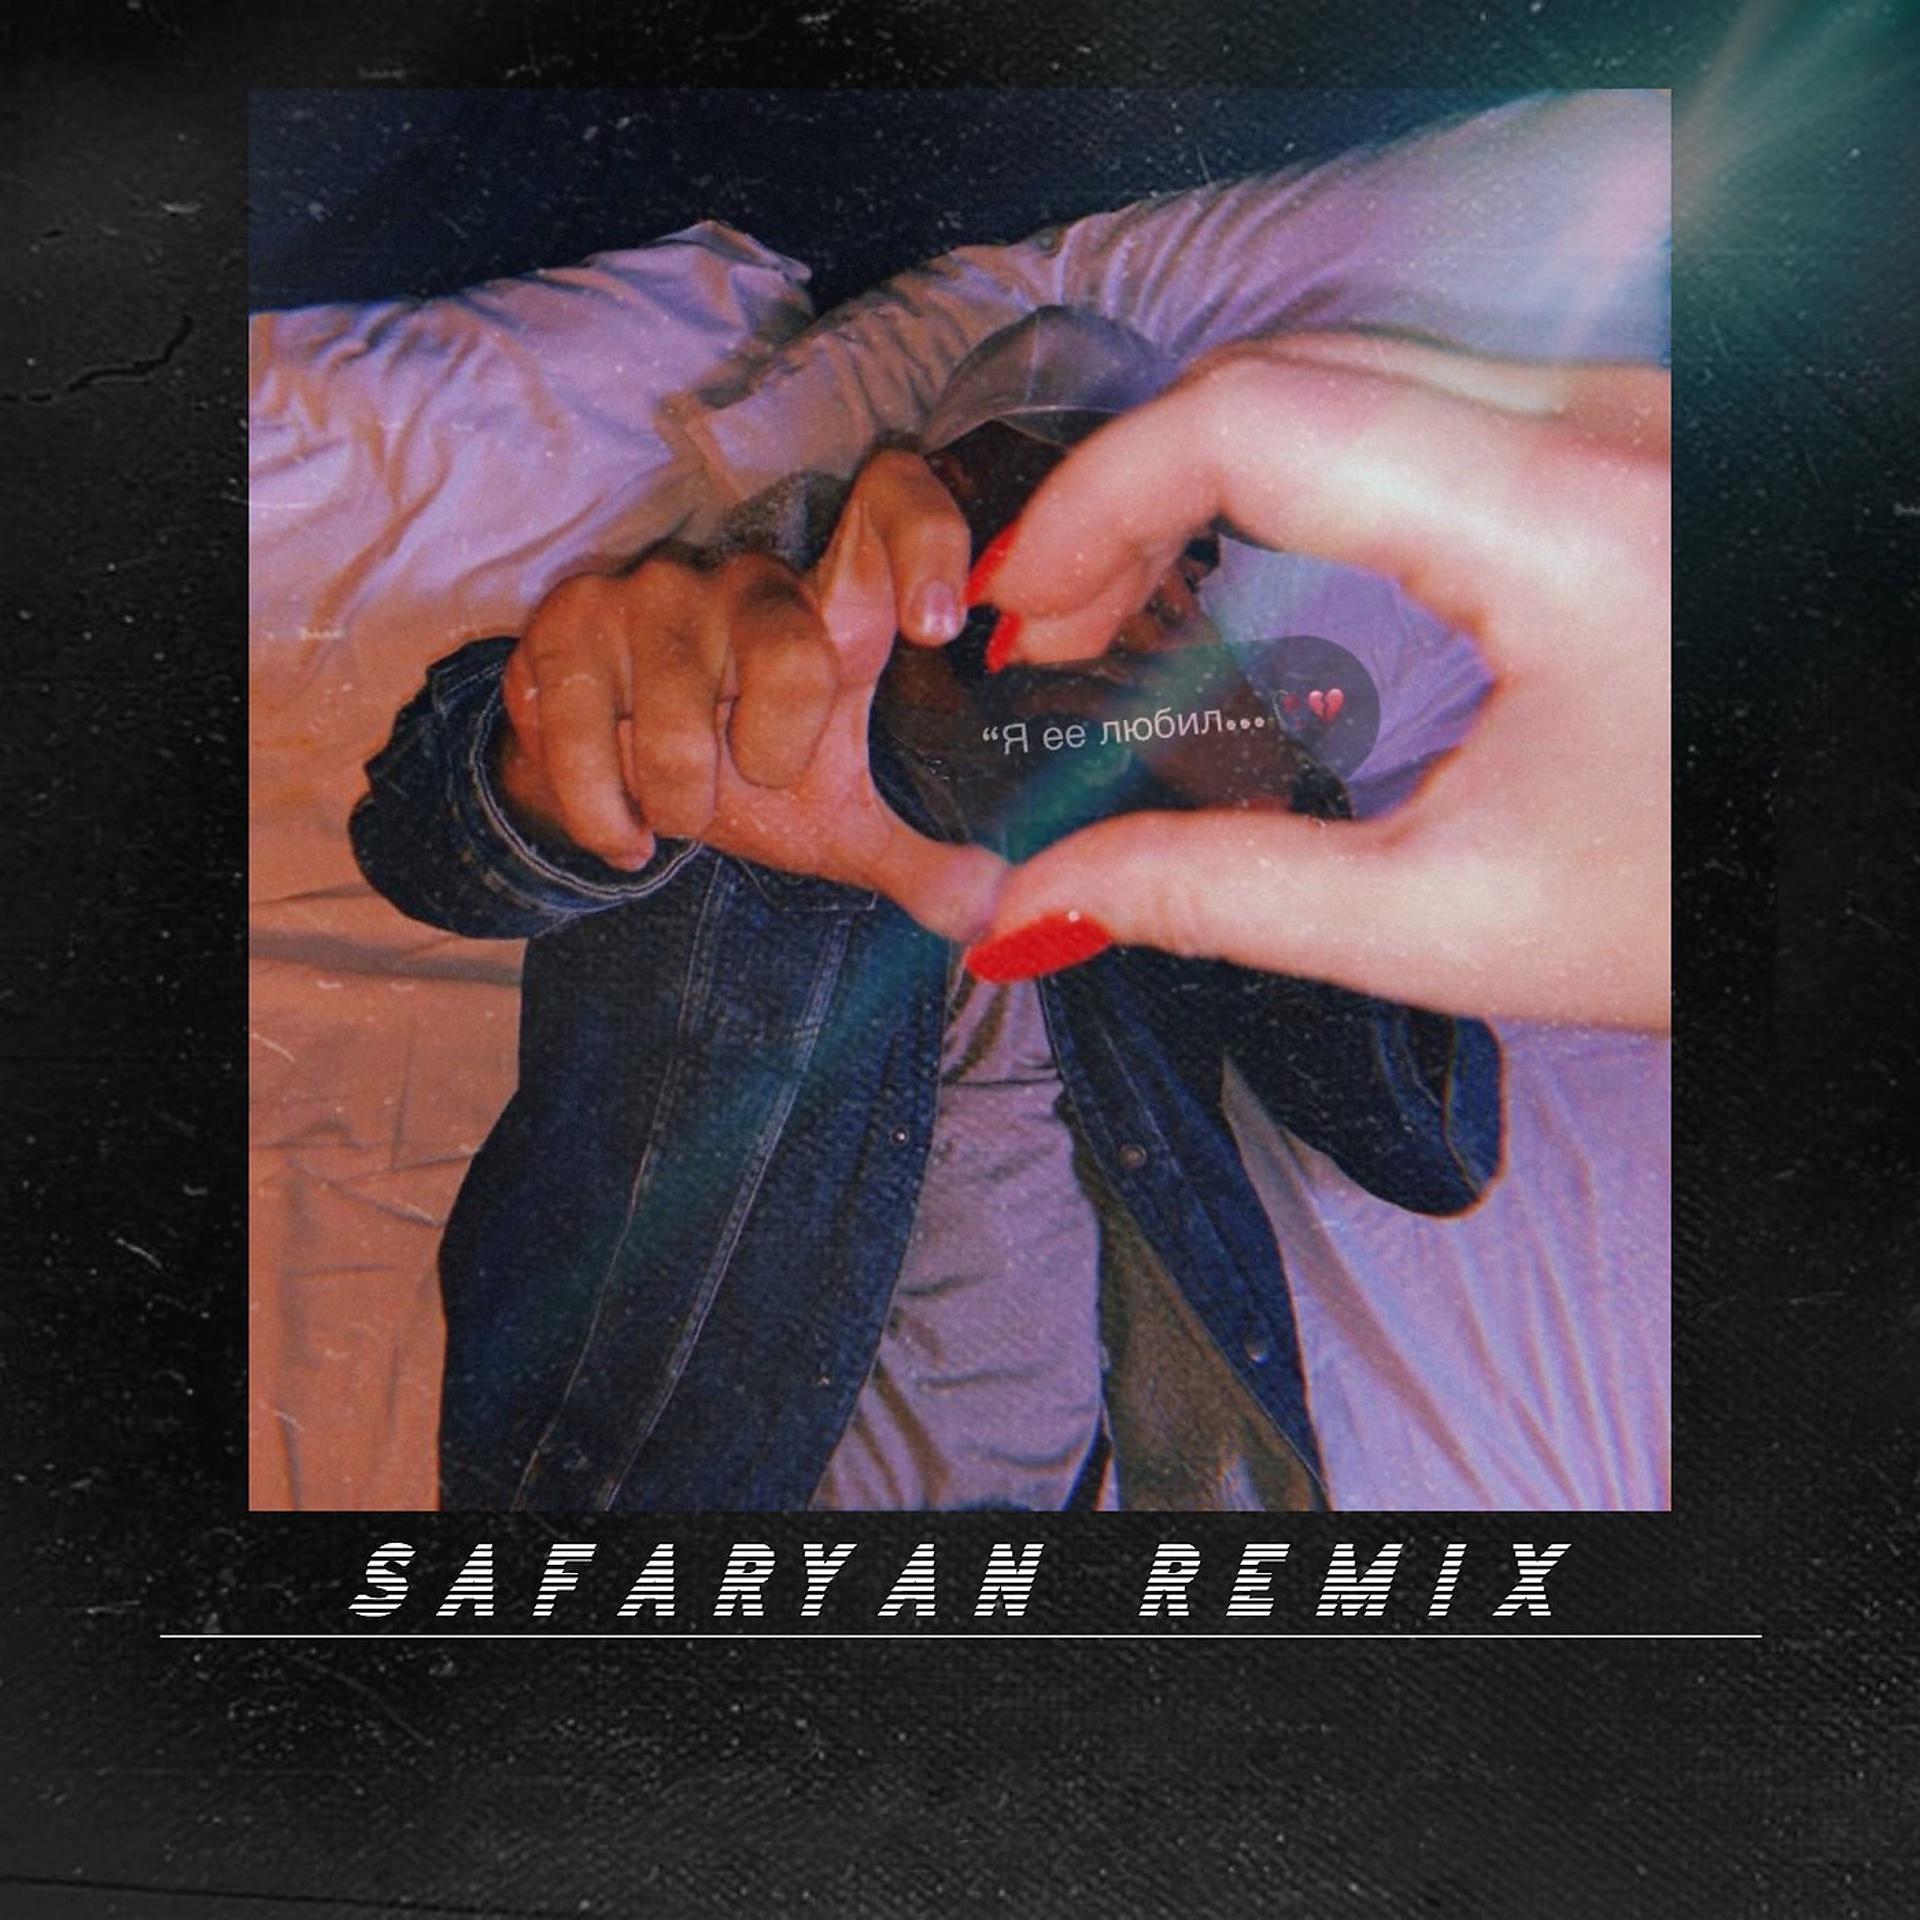 Safaryan Beats. (Safaryan Remix). Я её любил Vitali. Джанага альбом. Обожай ремикс